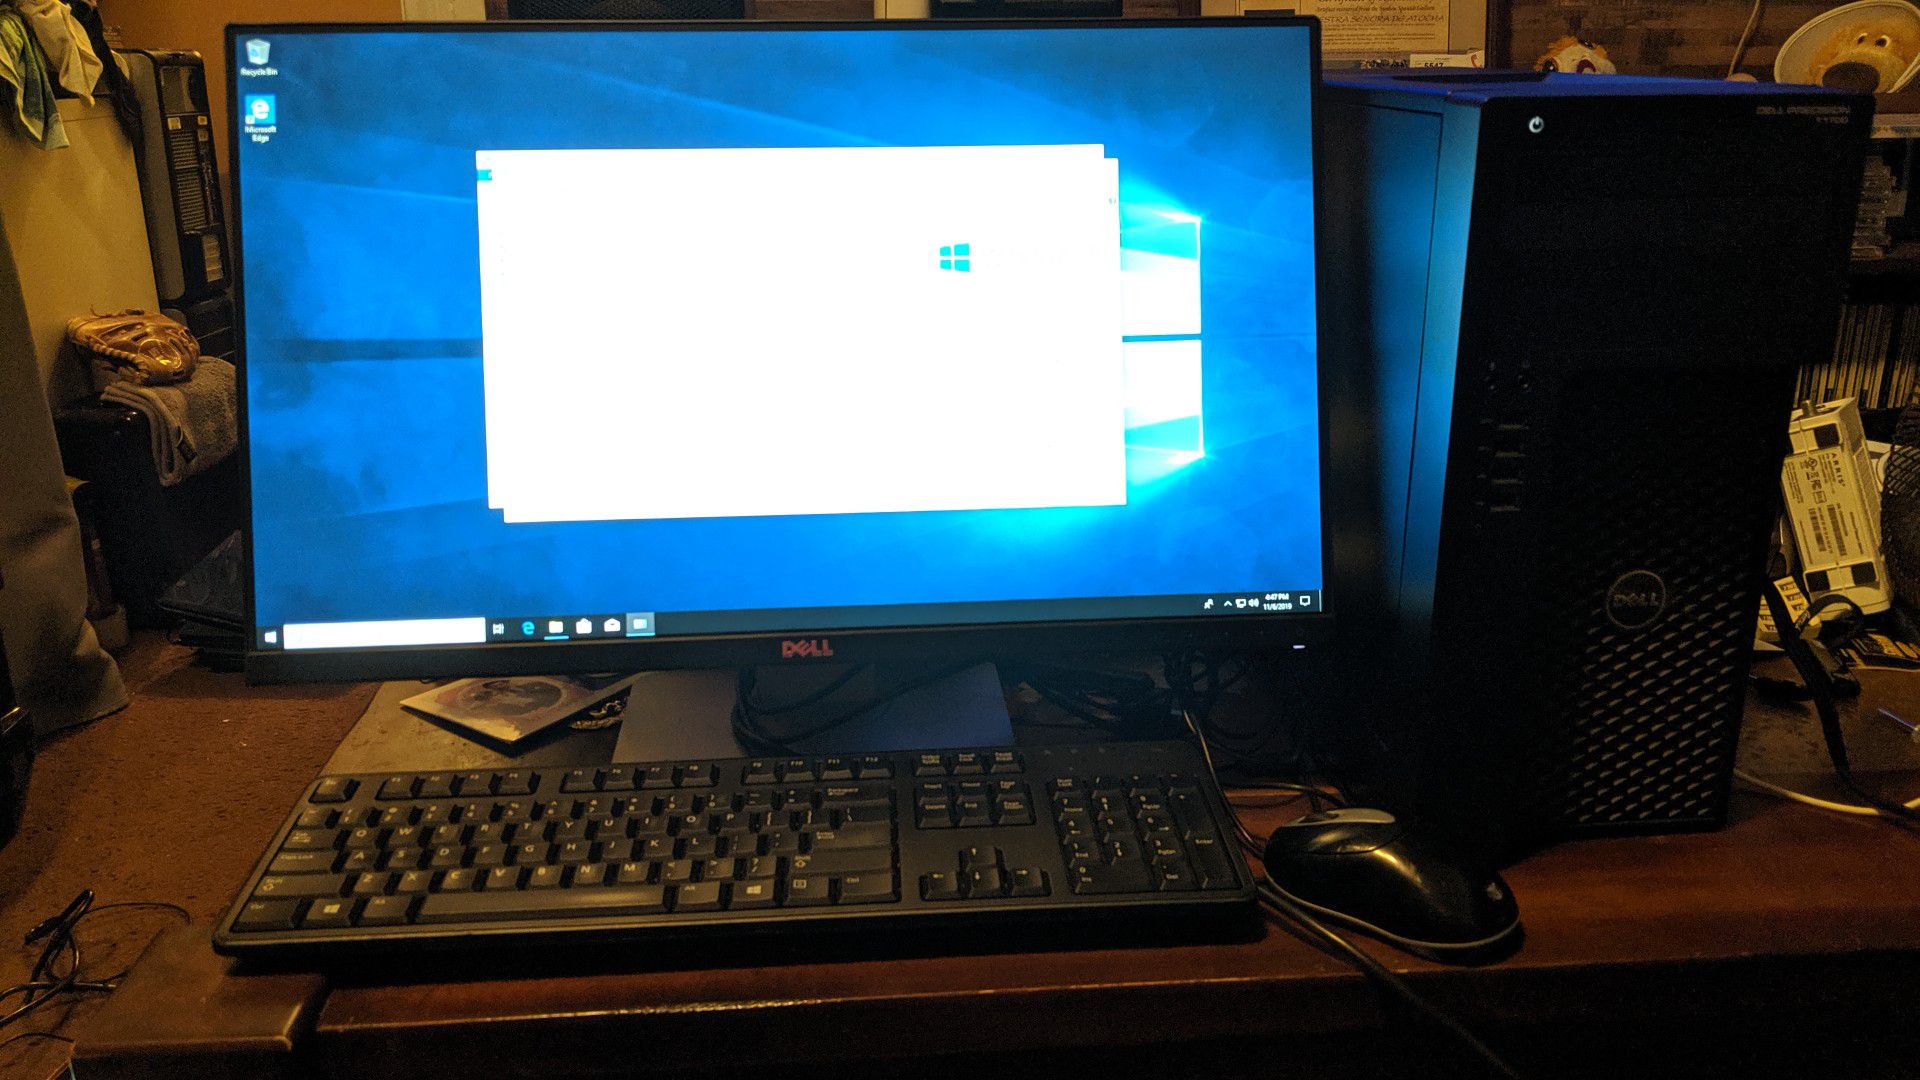 Dell Precision T1700 Xeon workstation computer w/ 16GB RAM, Windows 10 Pro, and a 24" monitor